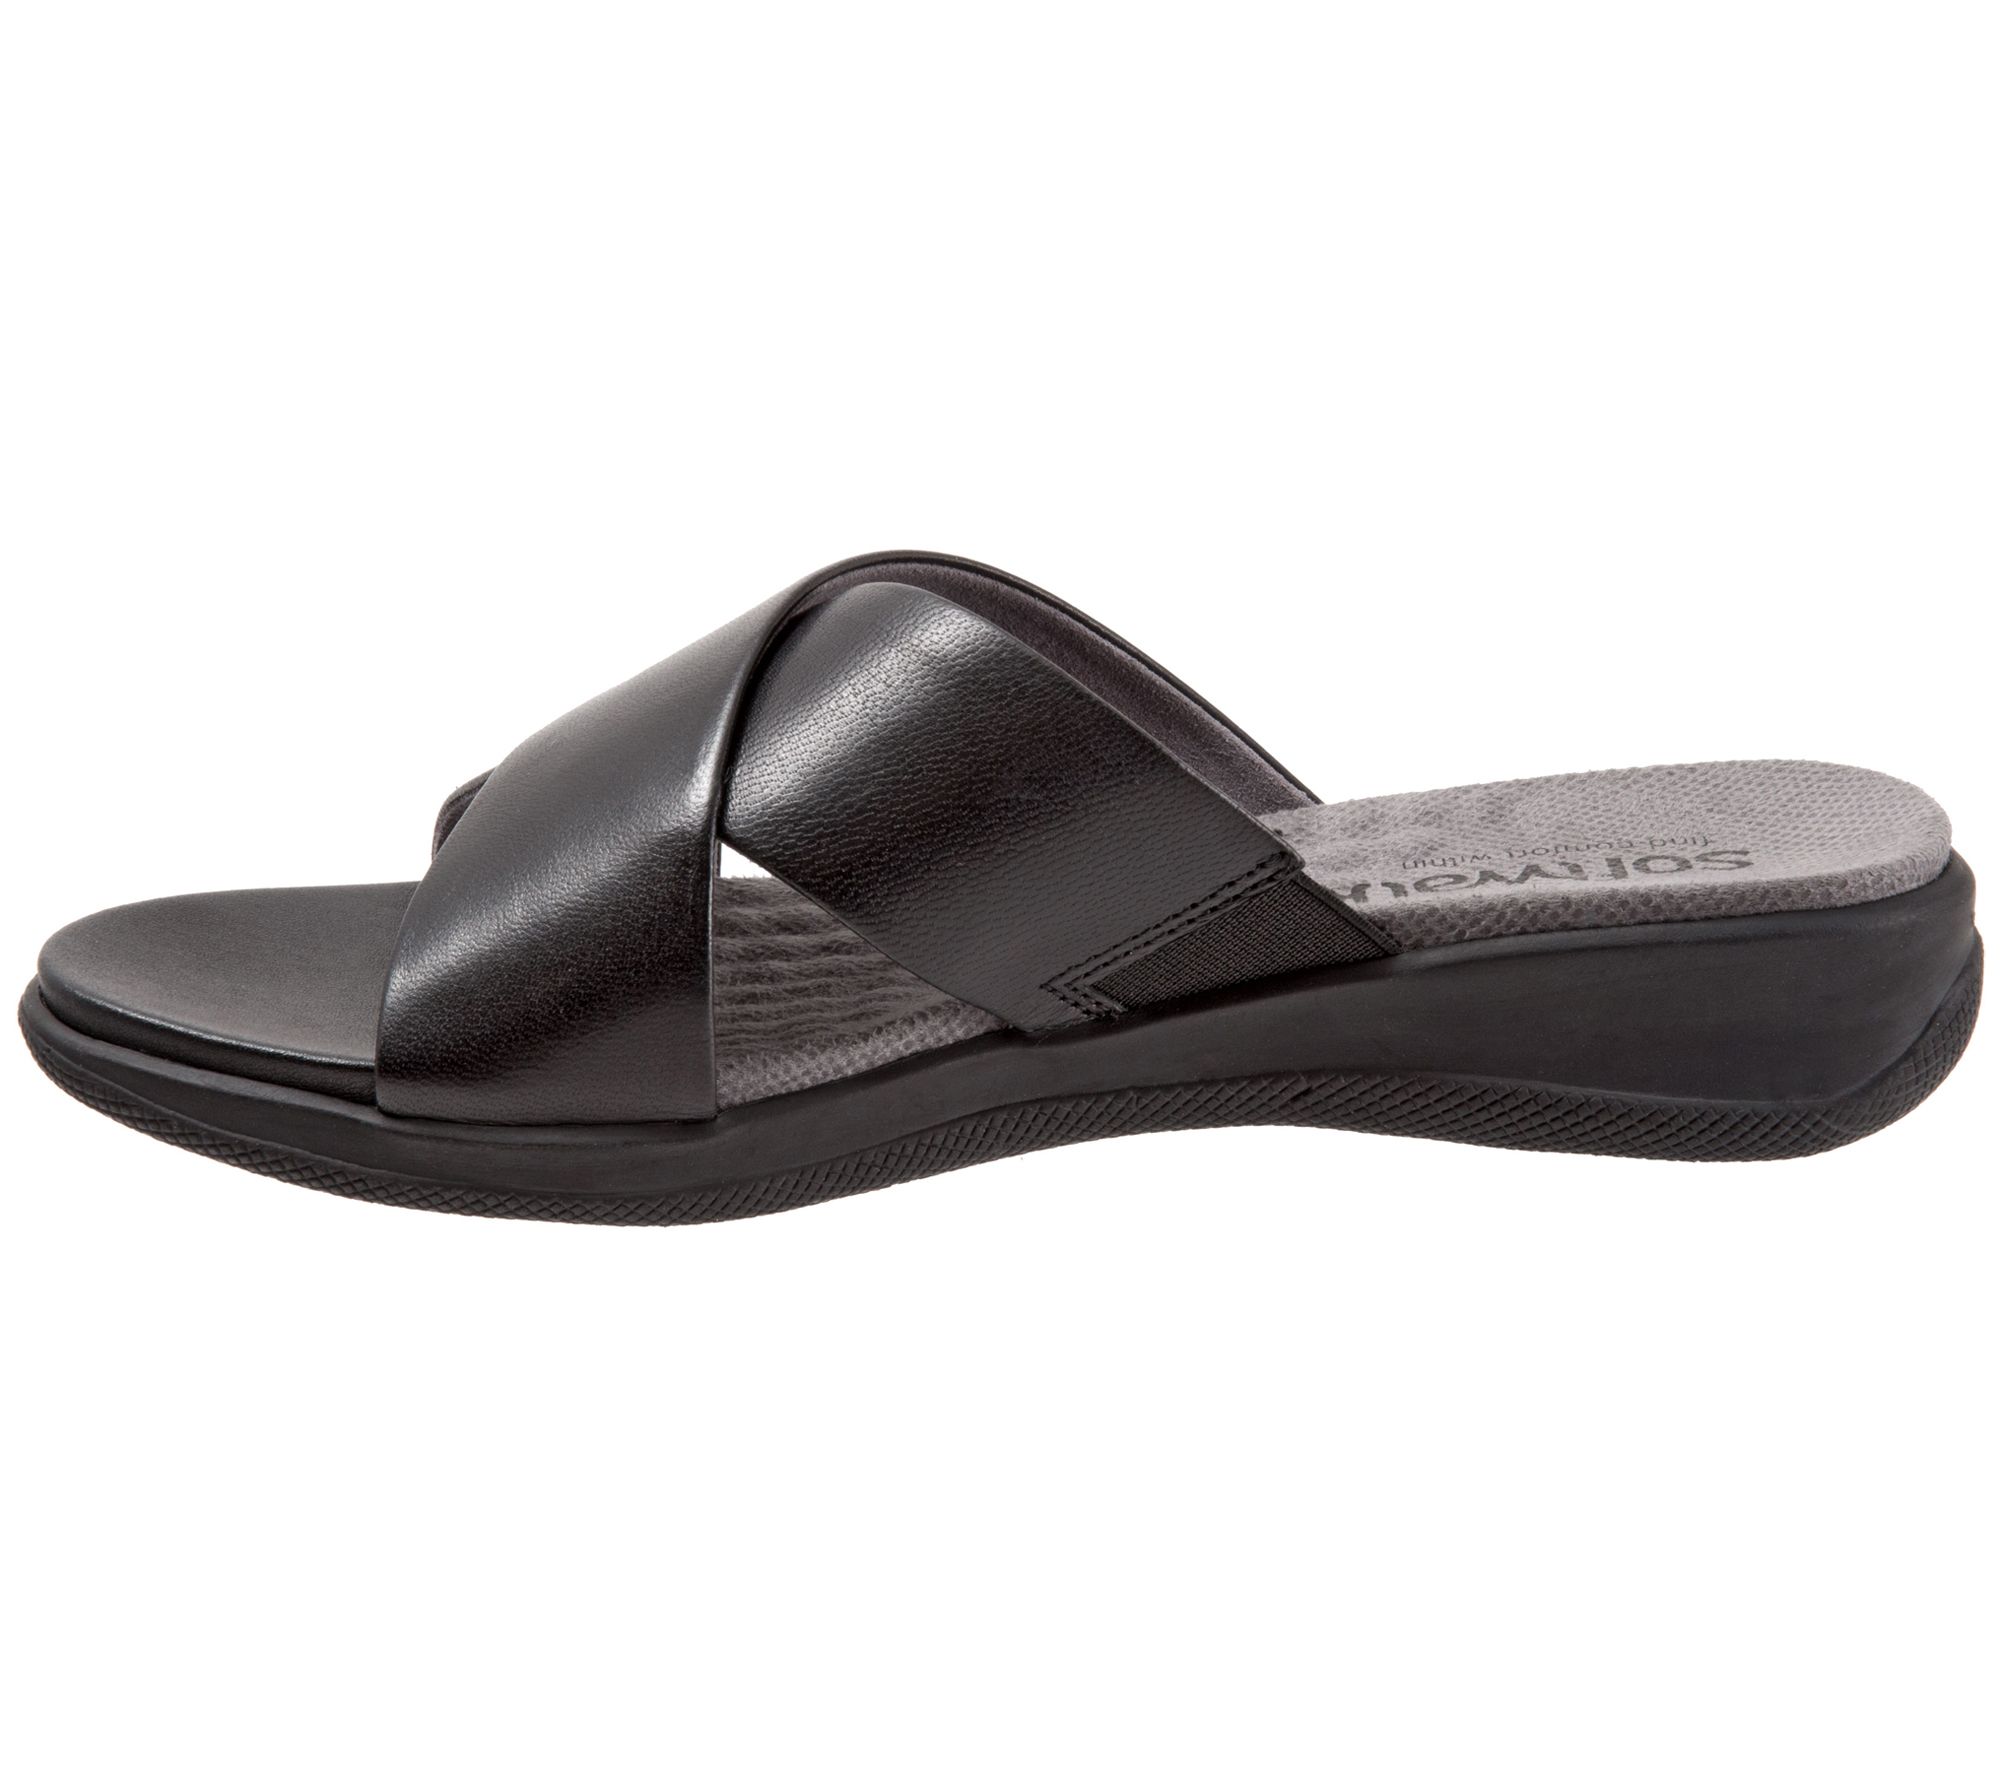 SoftWalk Slip-On Leather Sandals - Tillman - QVC.com